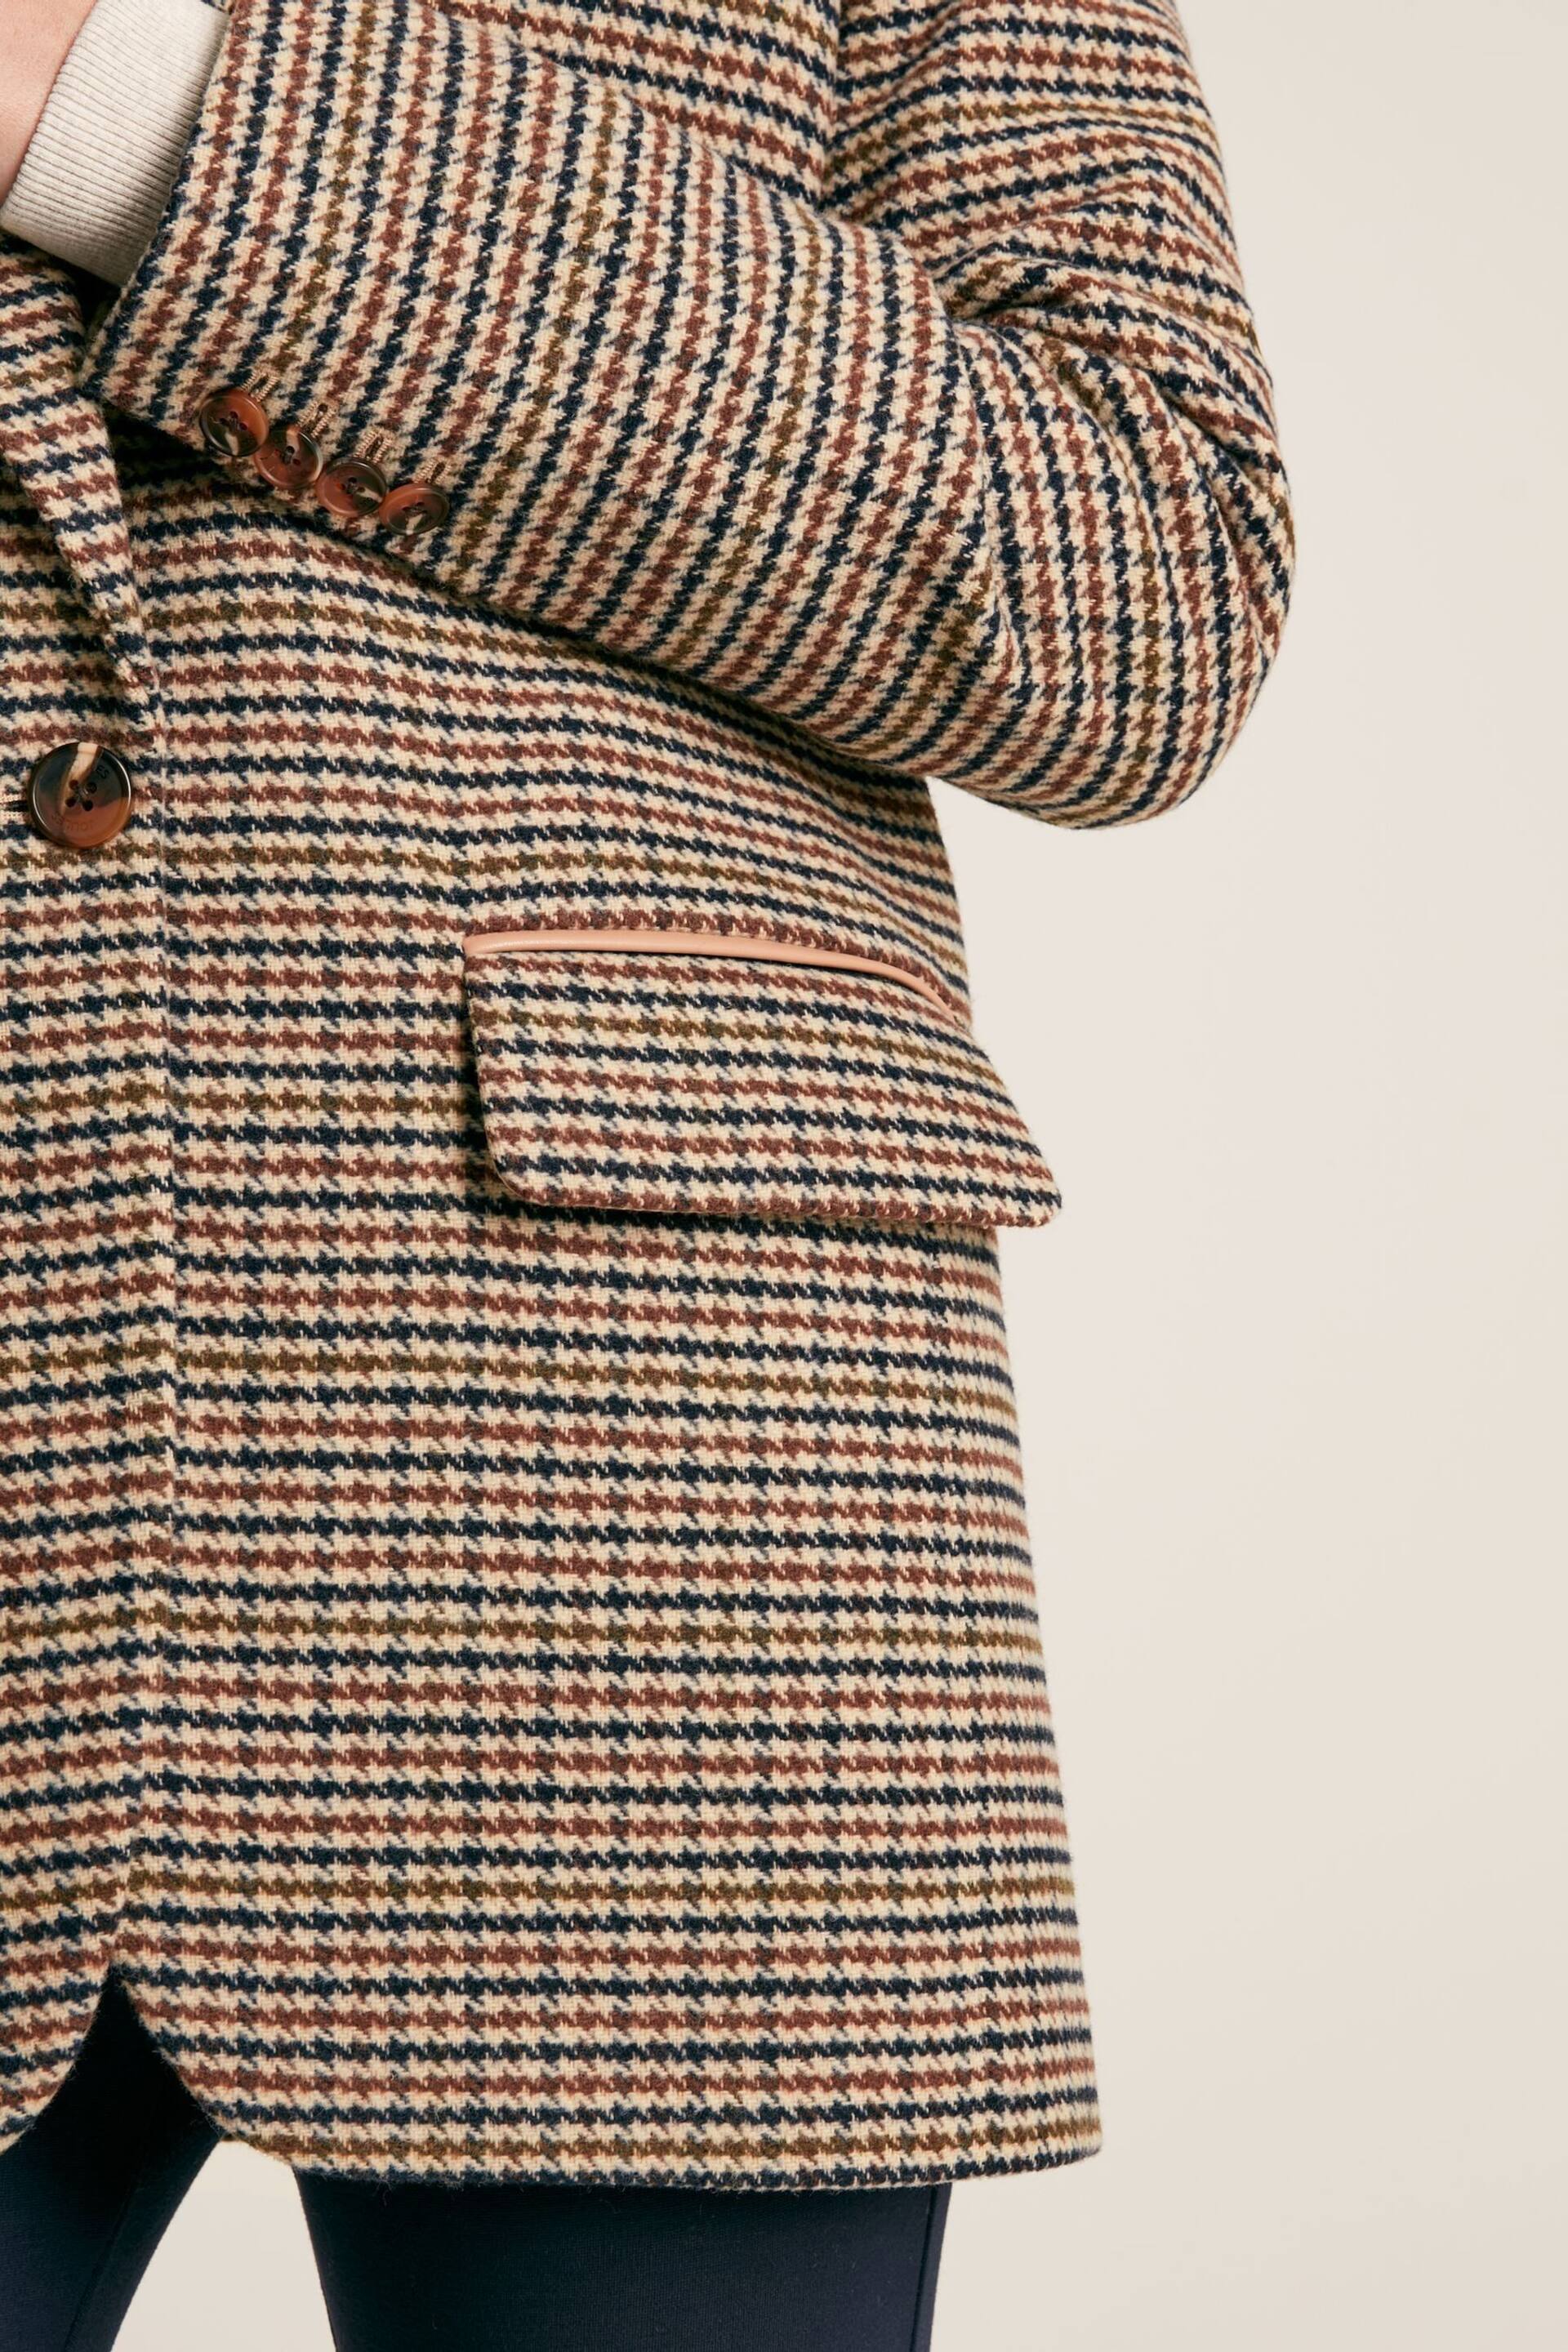 Joules Hackmore Brown Tweed Oversized Wool Blend Blazer - Image 10 of 11